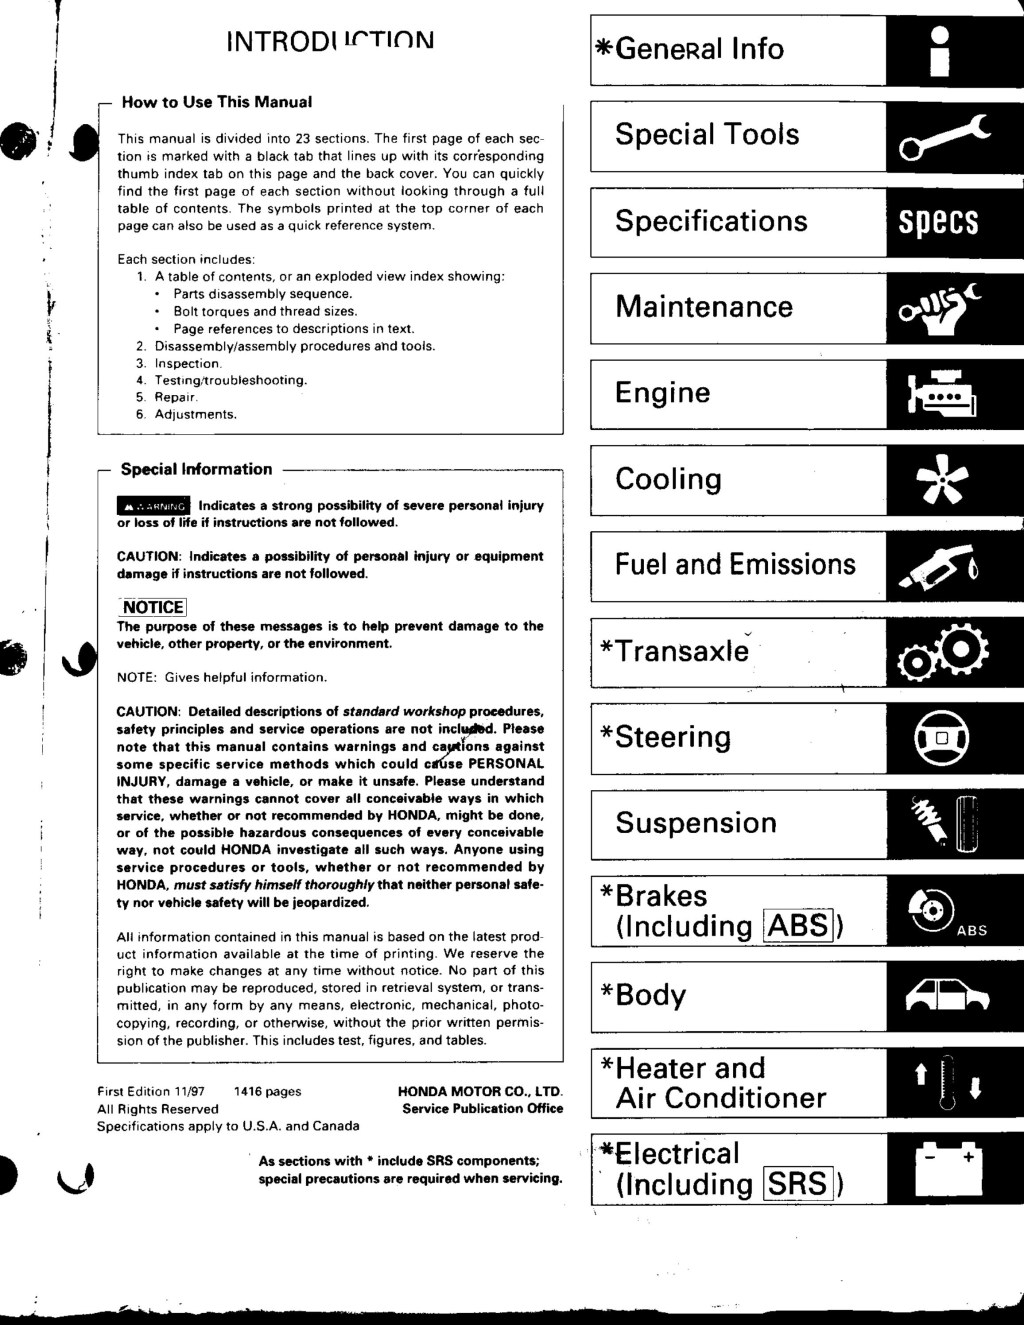 Picture of: ACURA INTEGRA Service Repair Manual by kmrdisbnvmk – Issuu